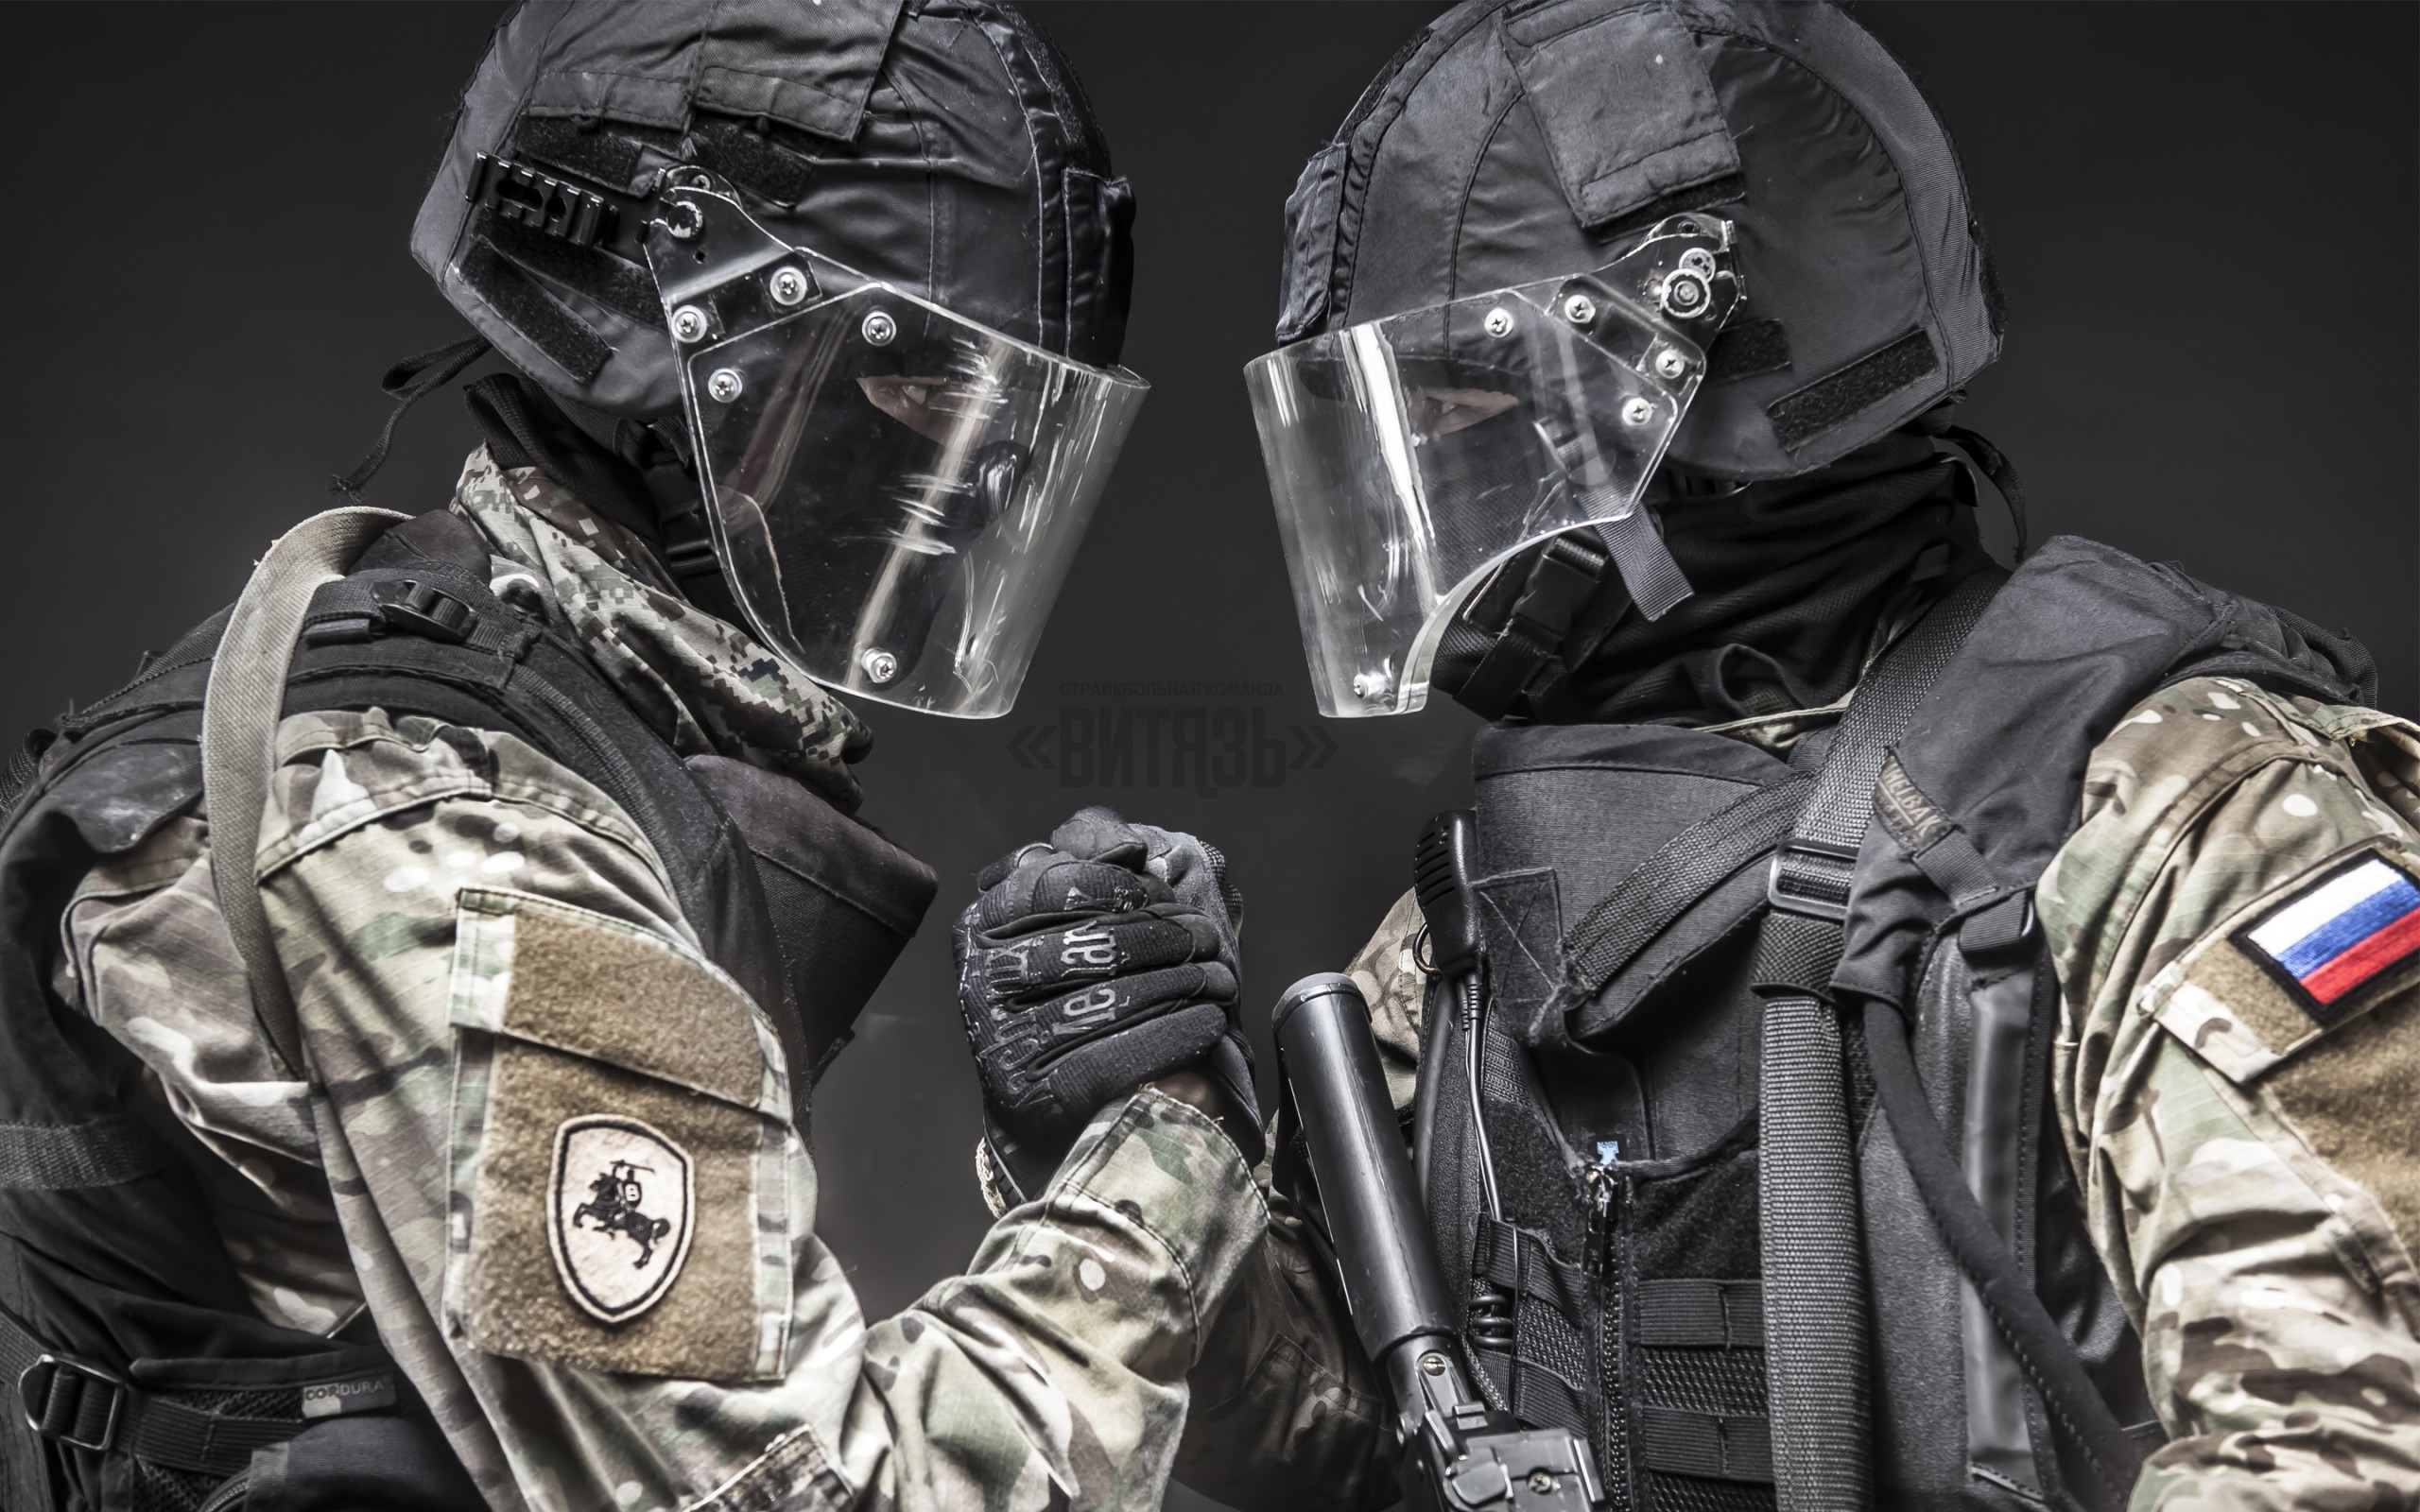 Wallpapers fighters helmets uniforms on the desktop